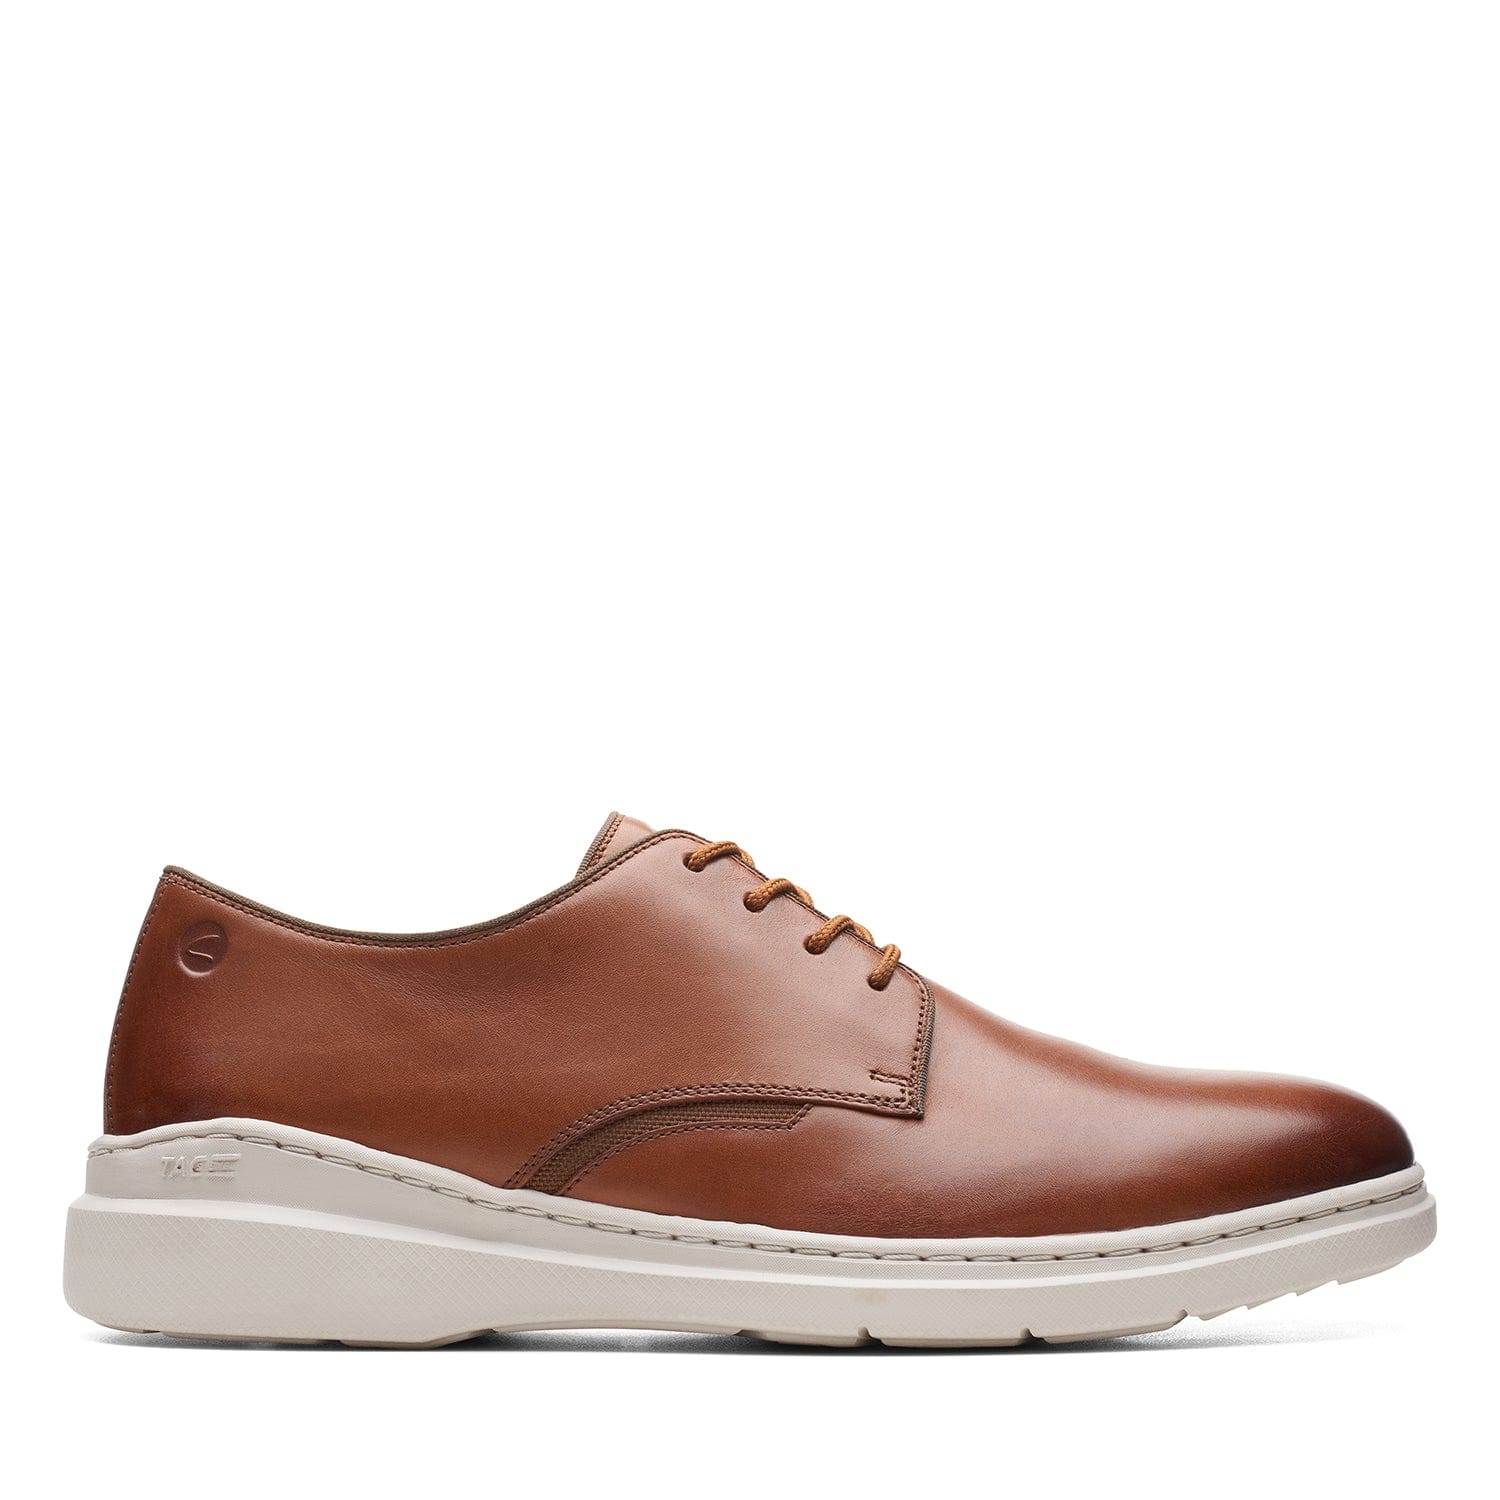 Clarks Dennet Low Shoes - Dark Tan Leather - 261629337 - G Width (Standard Fit)